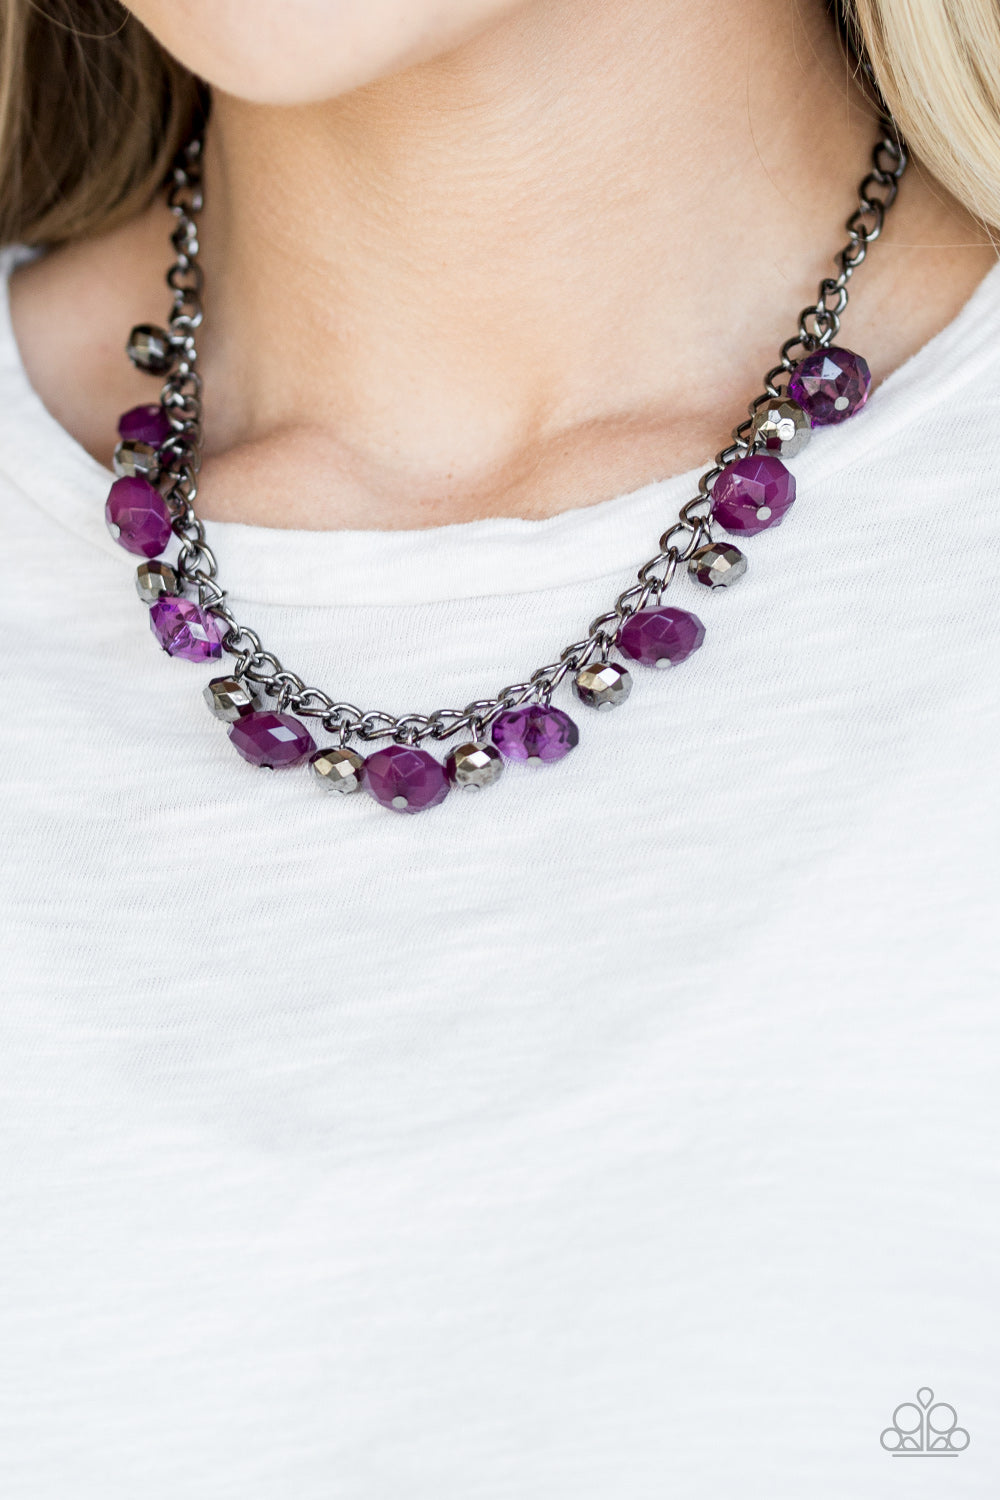 Paparazzi Accessories Runway Rebel - Purple Necklace & Earrings 